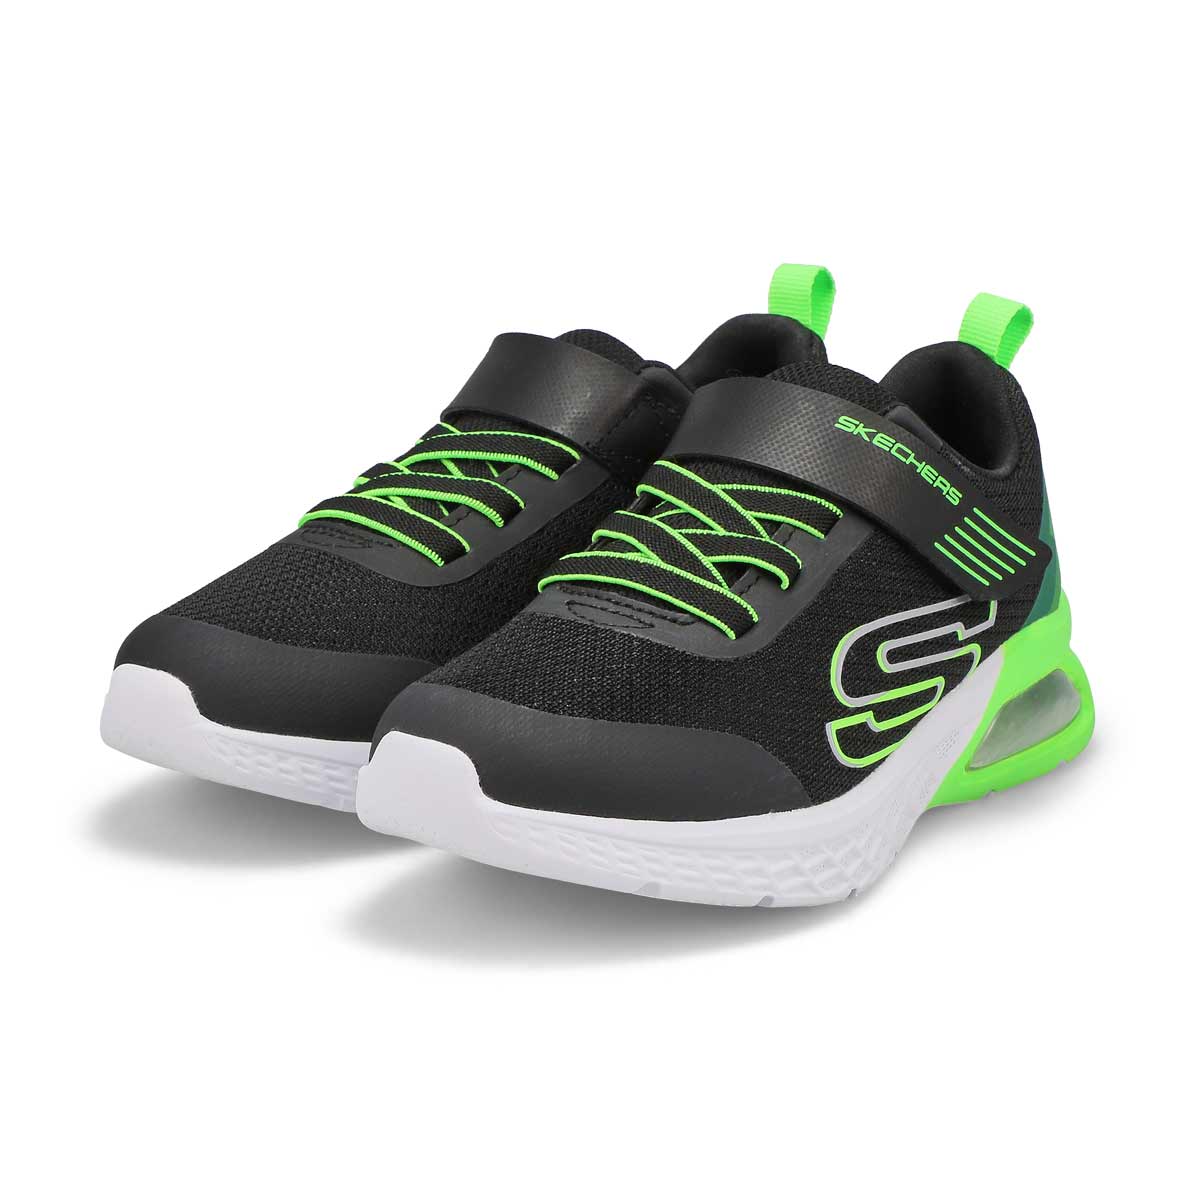 Boys'  Microspec Max II Sneaker - Black/Lime